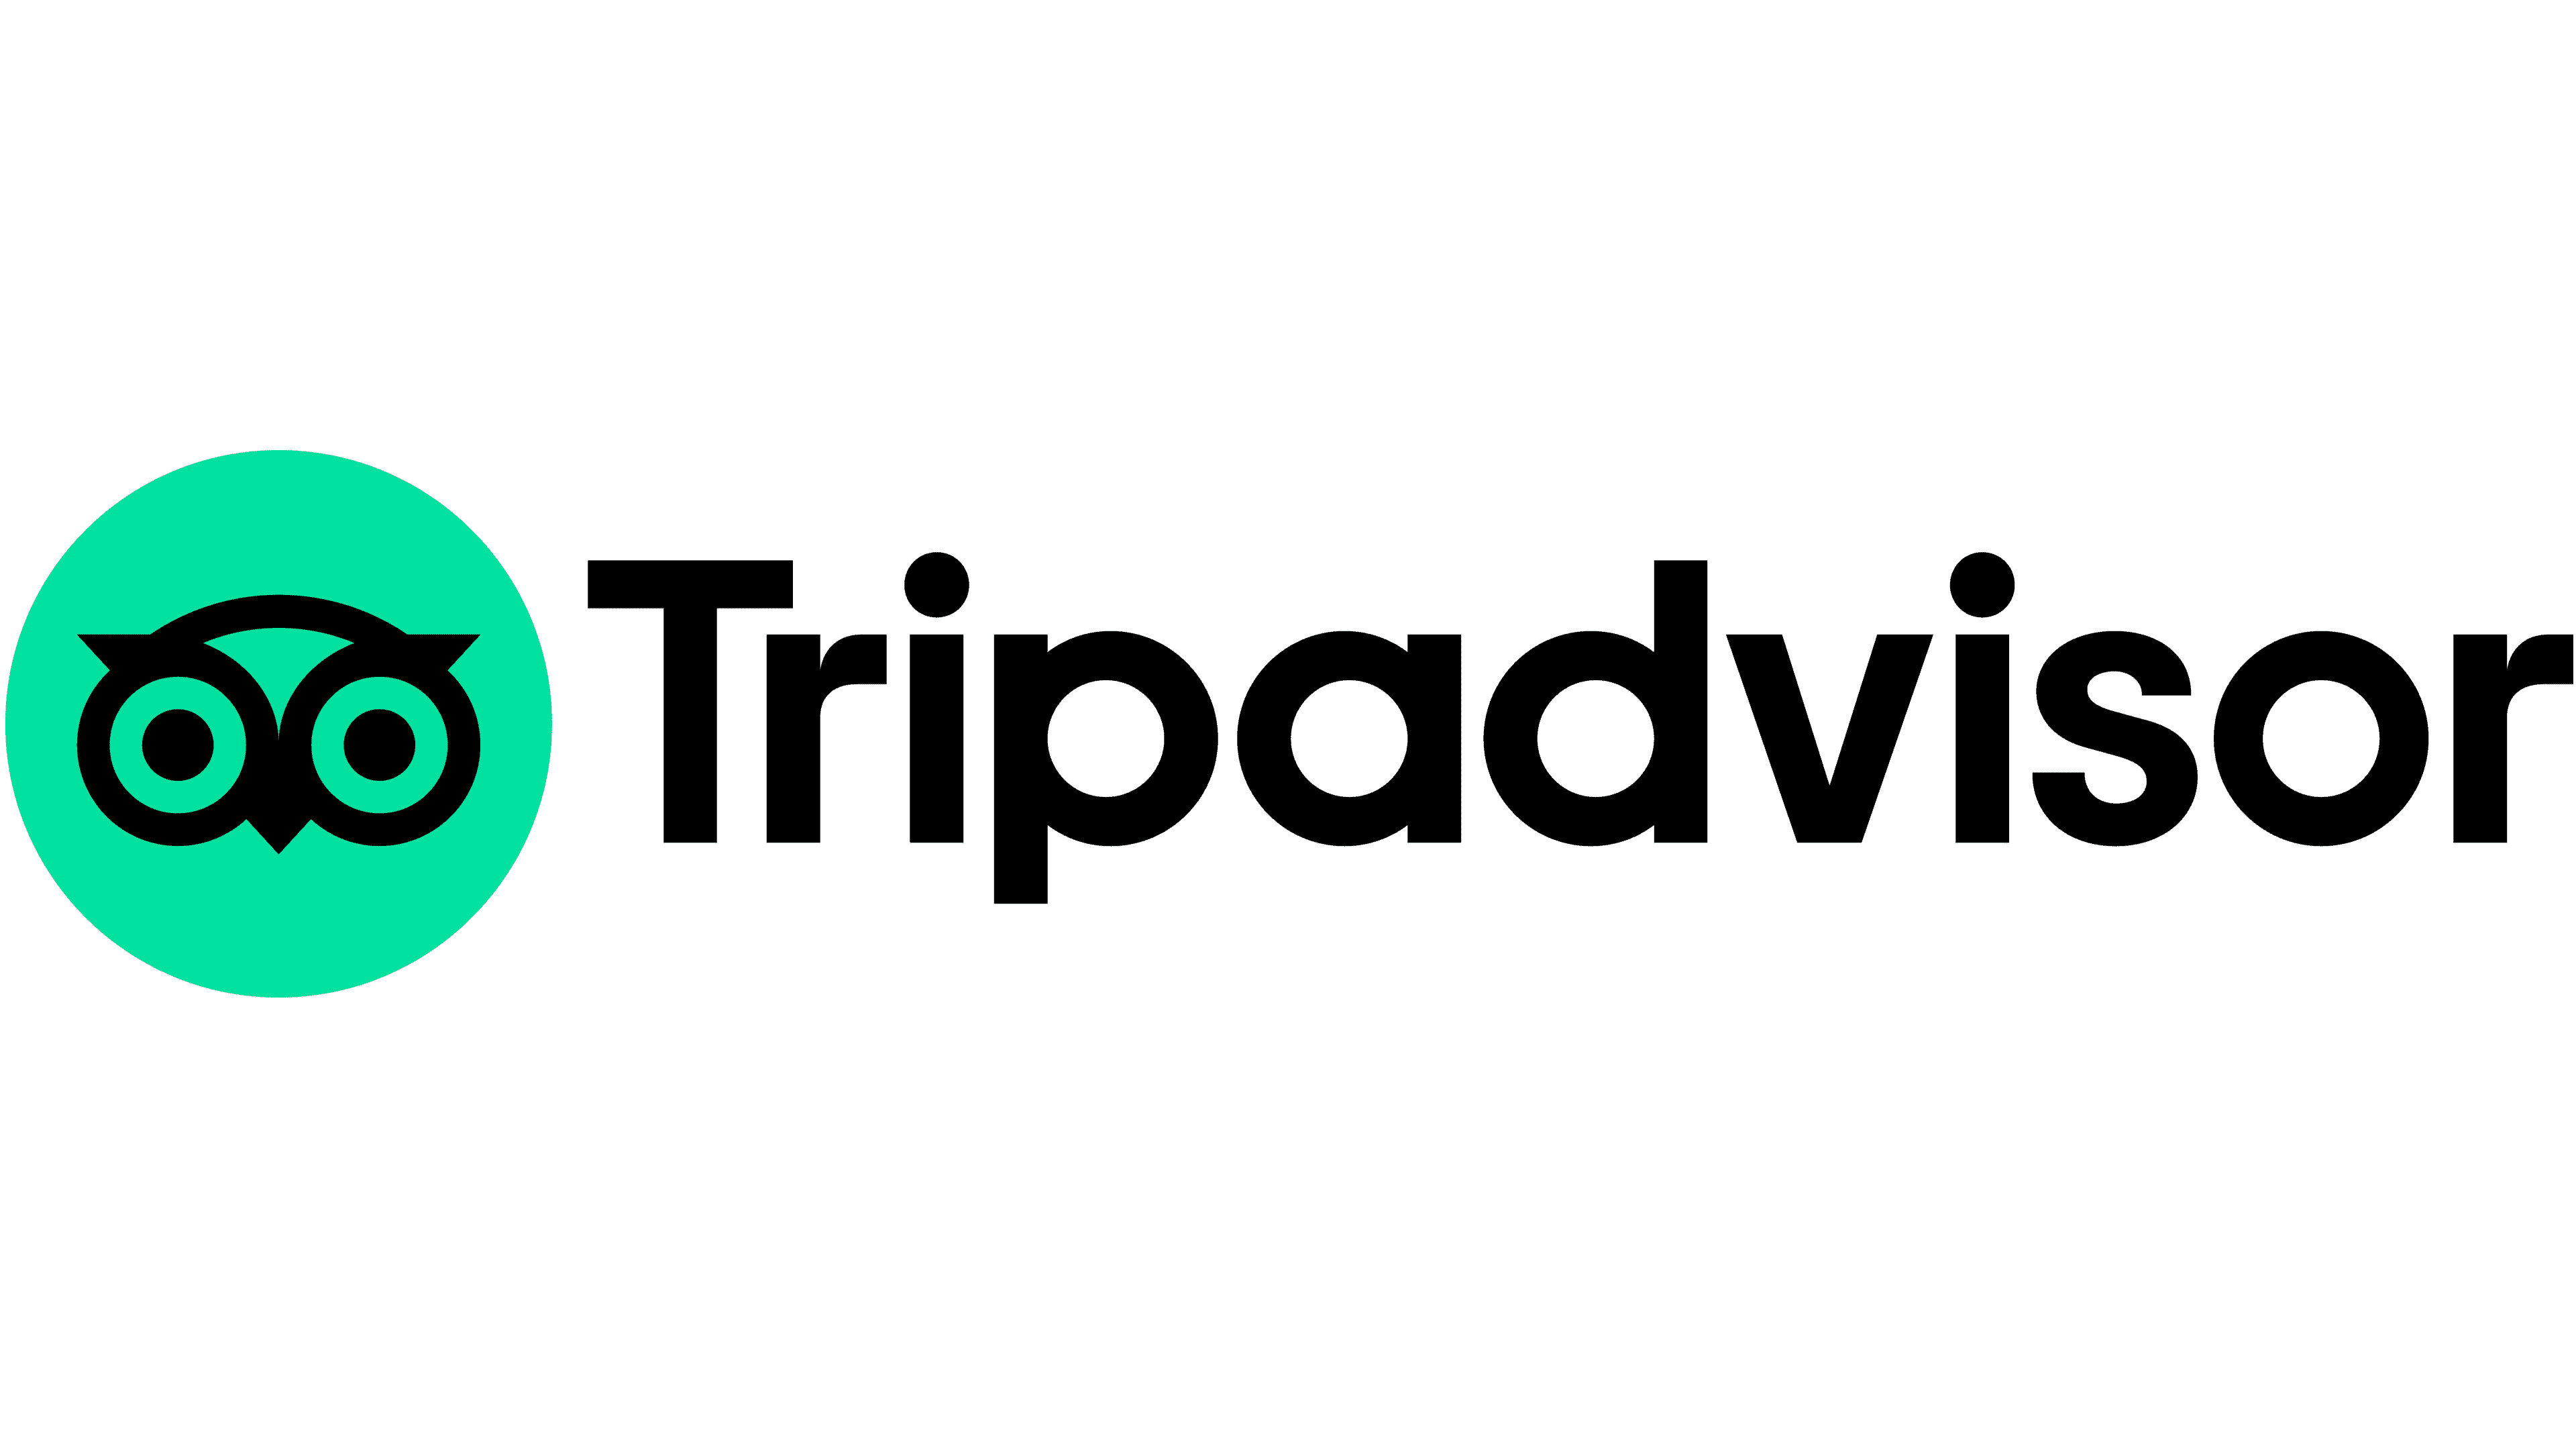 letzi logo of tripadvisor connection